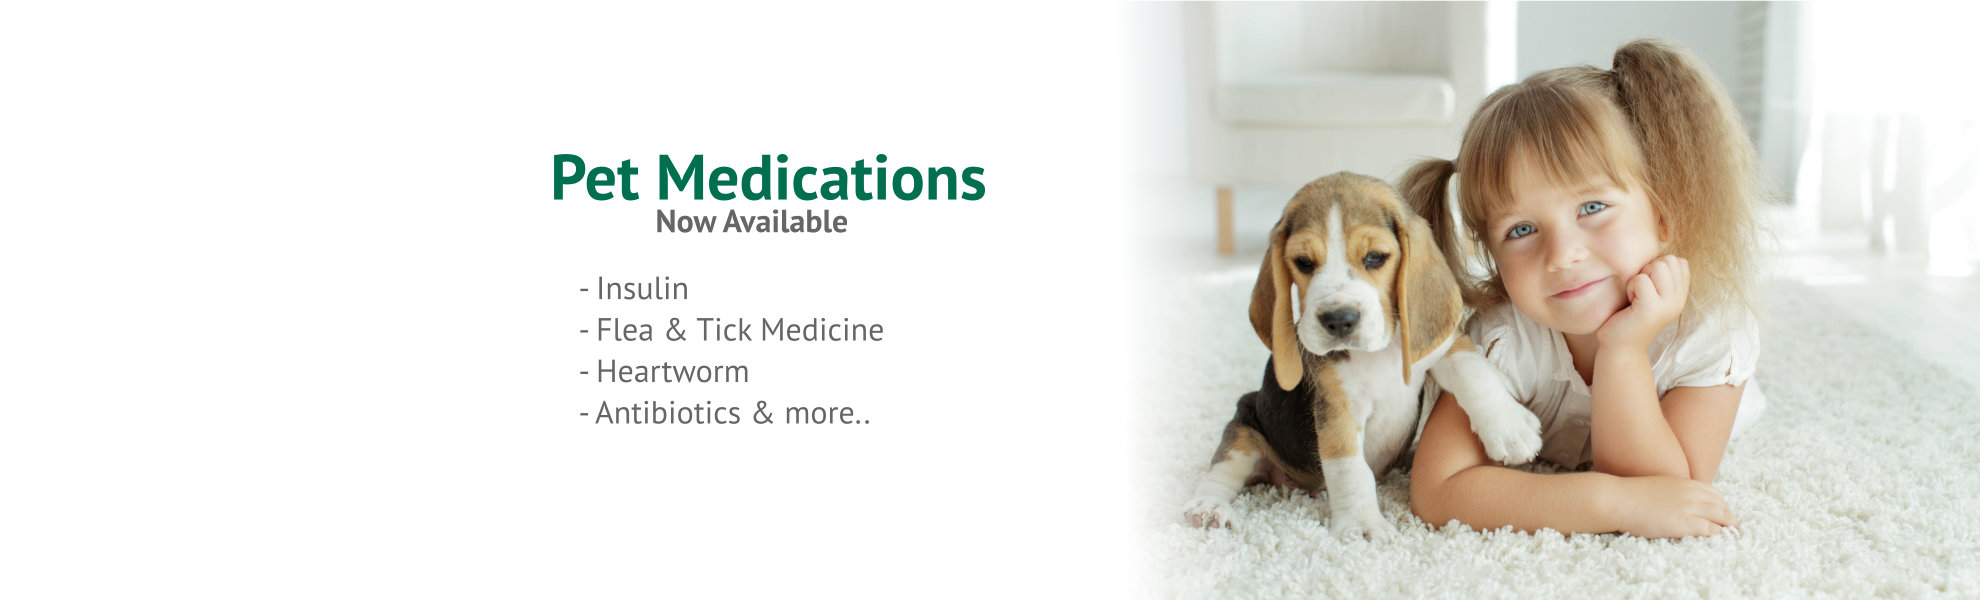 https://mipharmacy.ca/wp-content/uploads/2019/12/Guardian-Pet-Medications.jpg